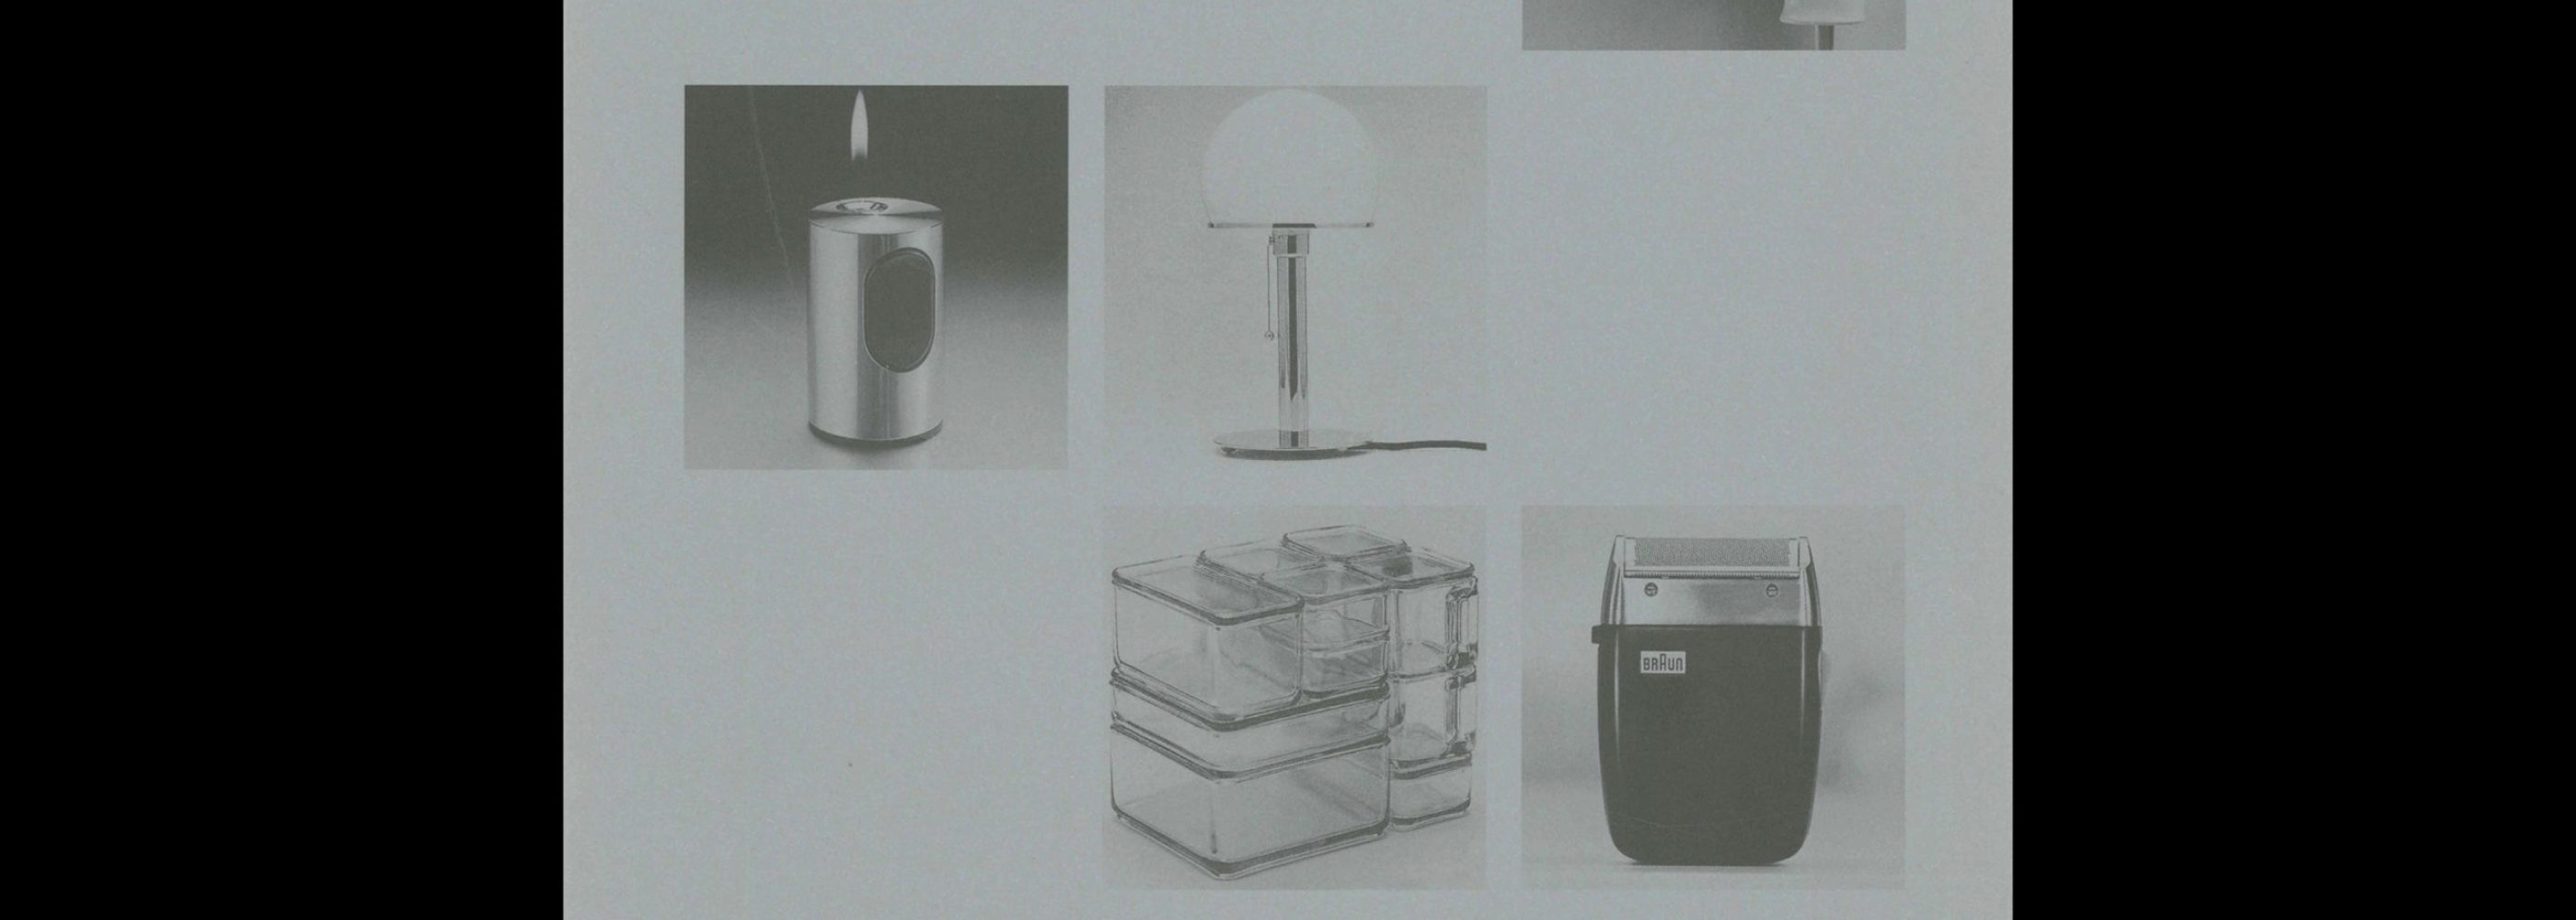 Braun+Design, SammlerBörse' 98/Süd, 1998. Designed by Günter Staeffler